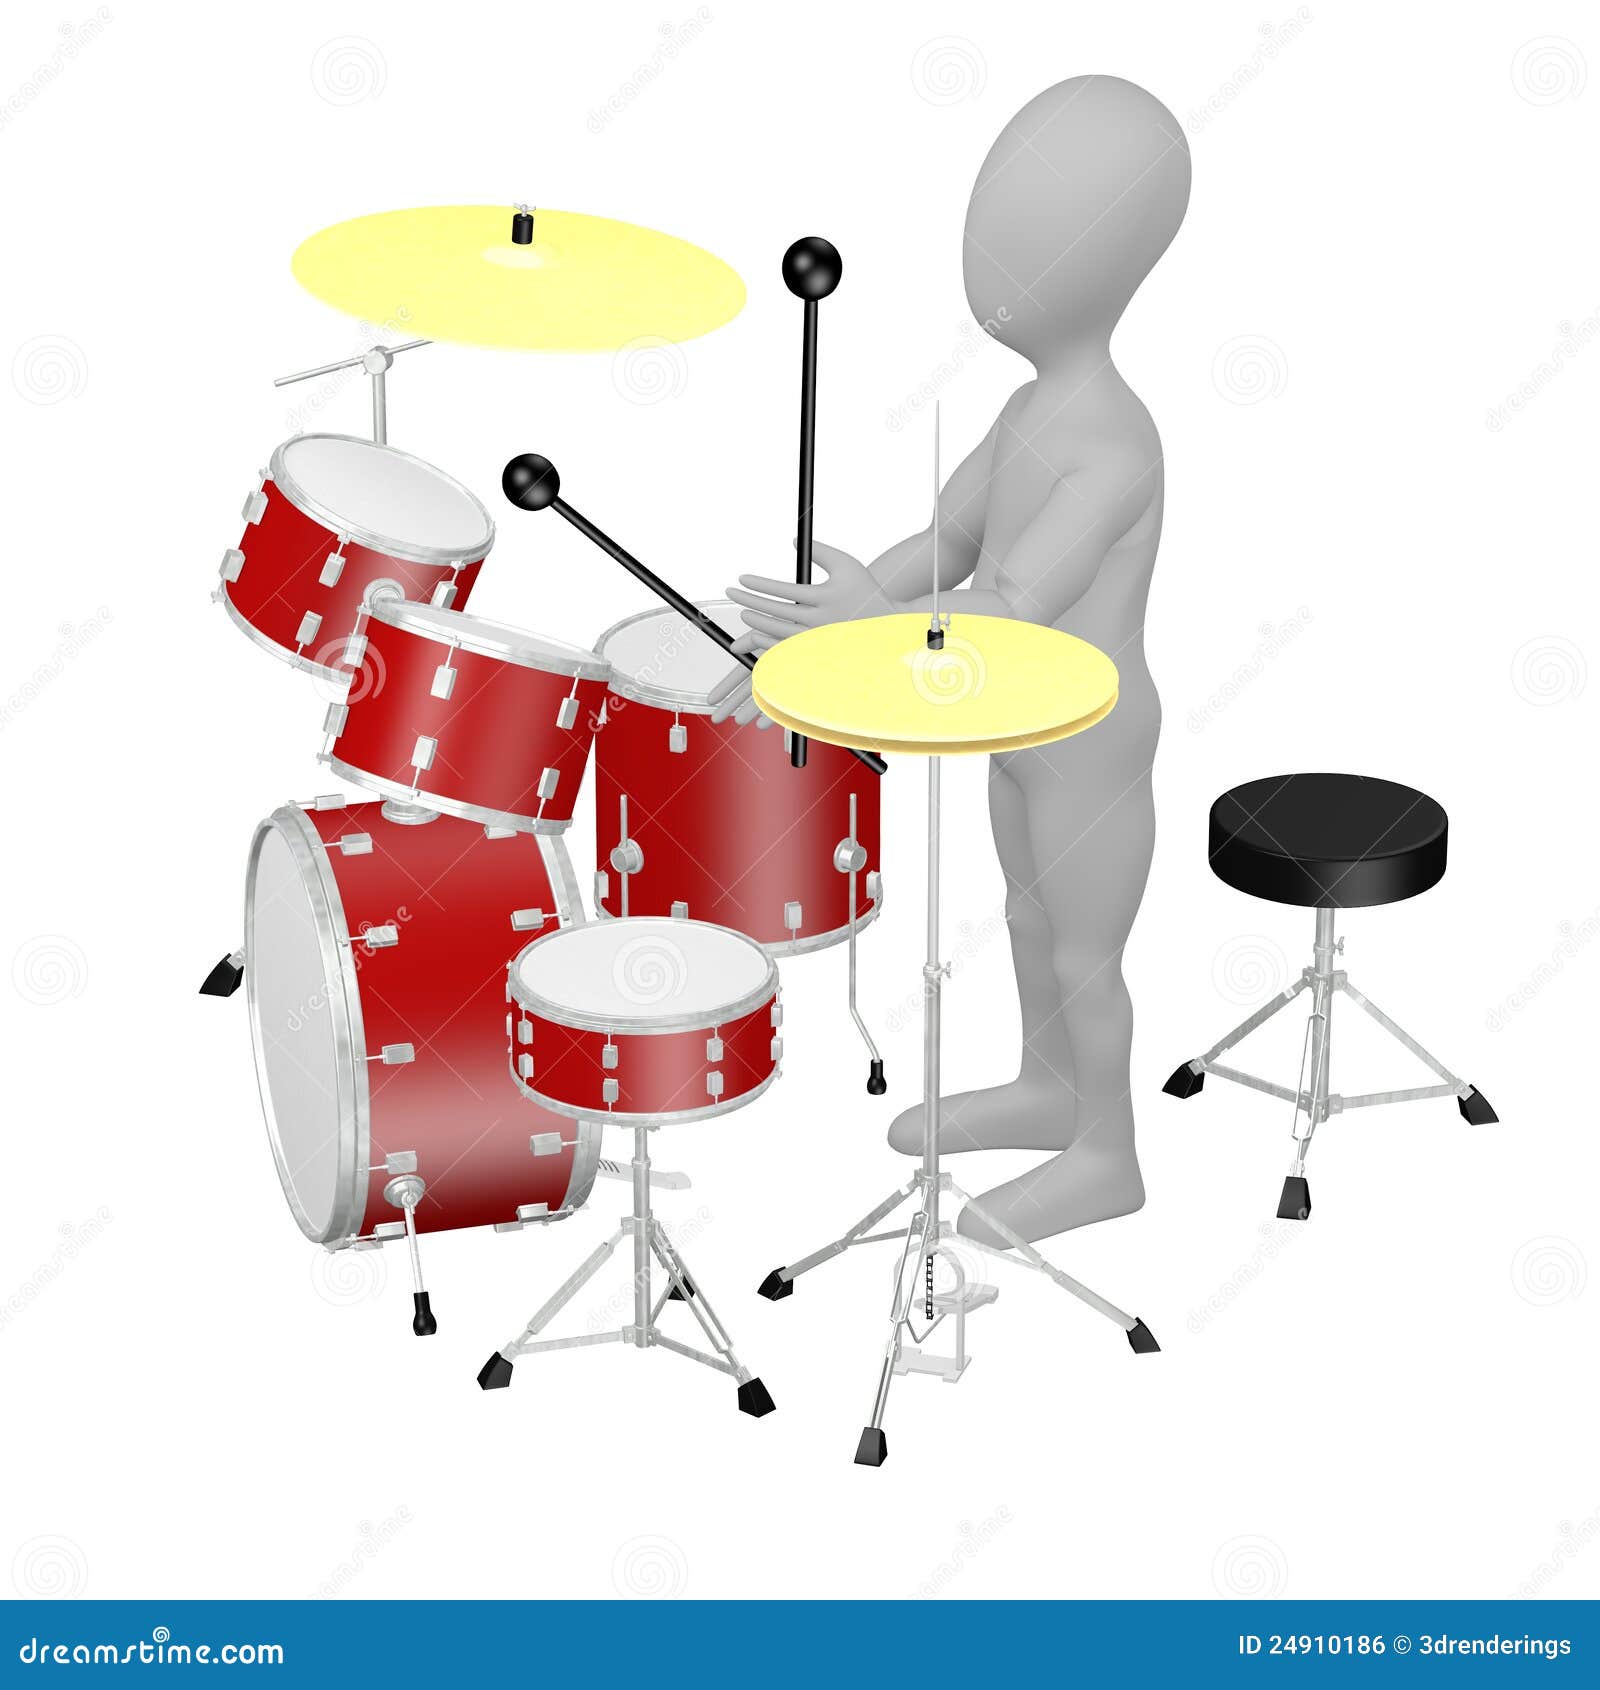 Cartoon drummer stock illustration. Illustration of beat - 24910186